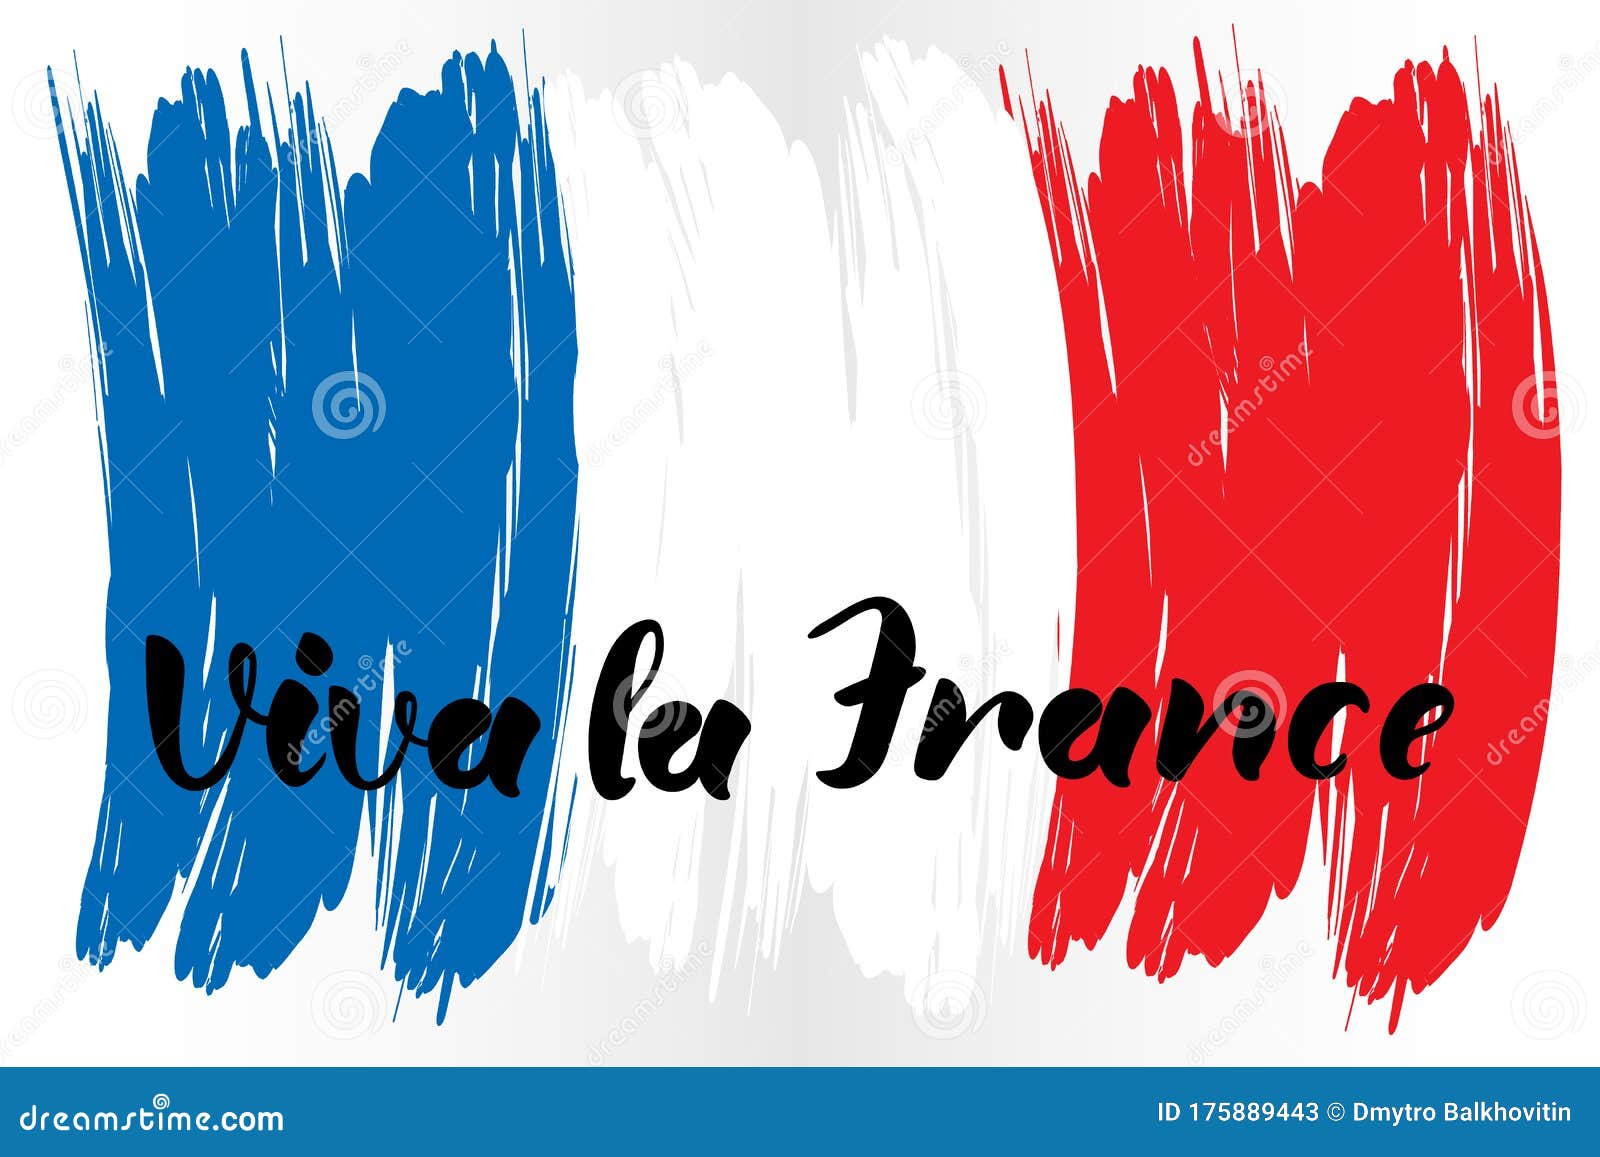 Viva La France Hand Lettering Text With National Flag Stock Illustration Illustration Of Greeting Copy 175889443